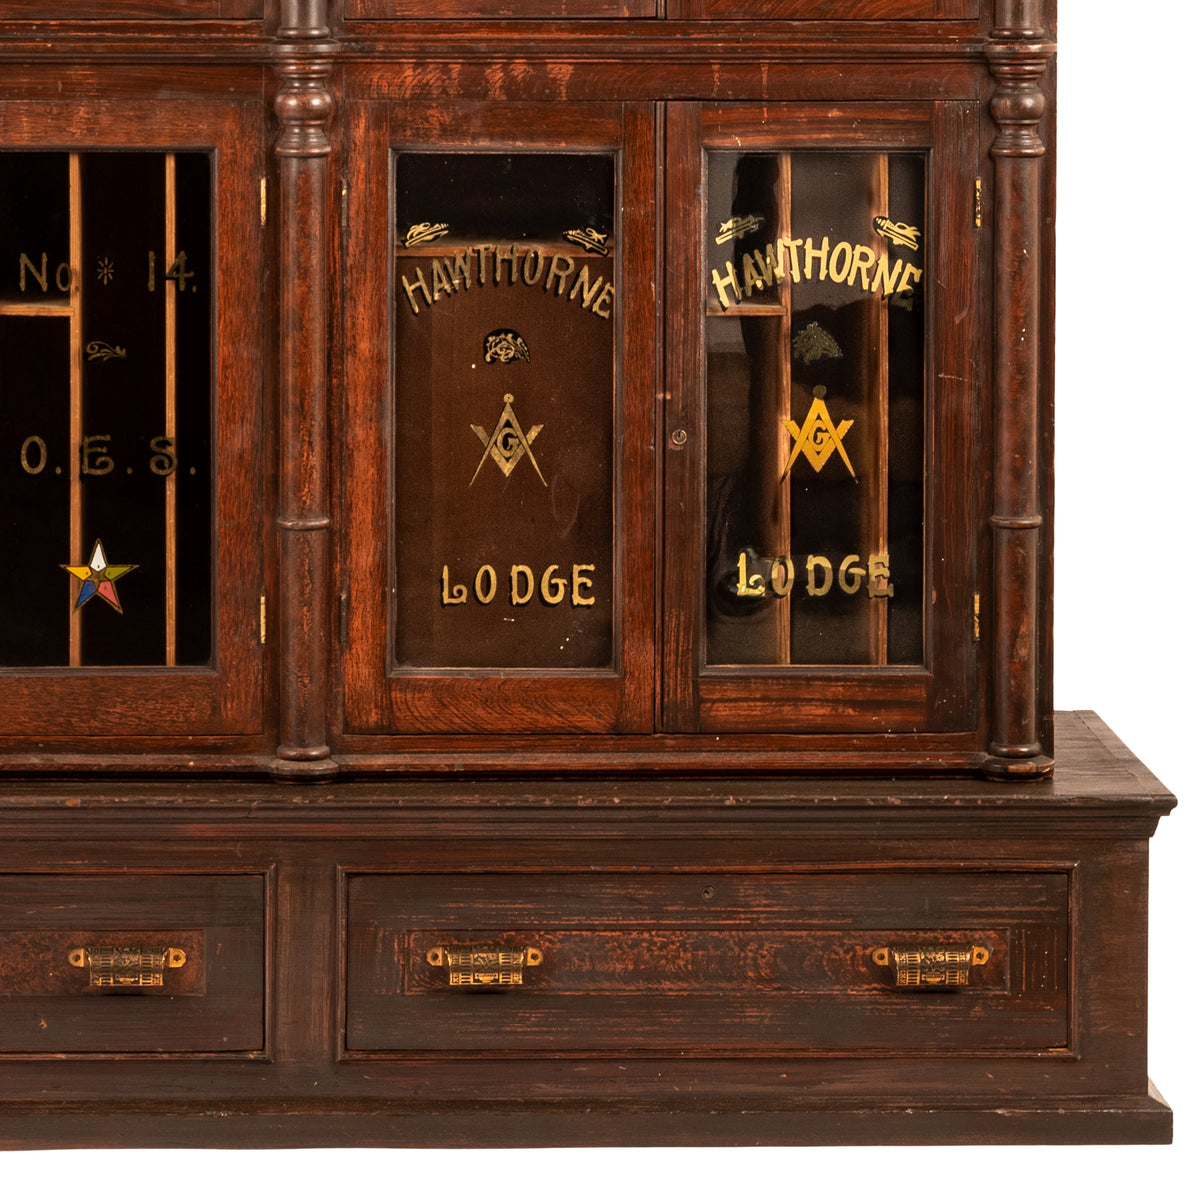 Antique Masonic Temple Display Filing Cabinet Bookcase Washington Lodge, Circa 1880